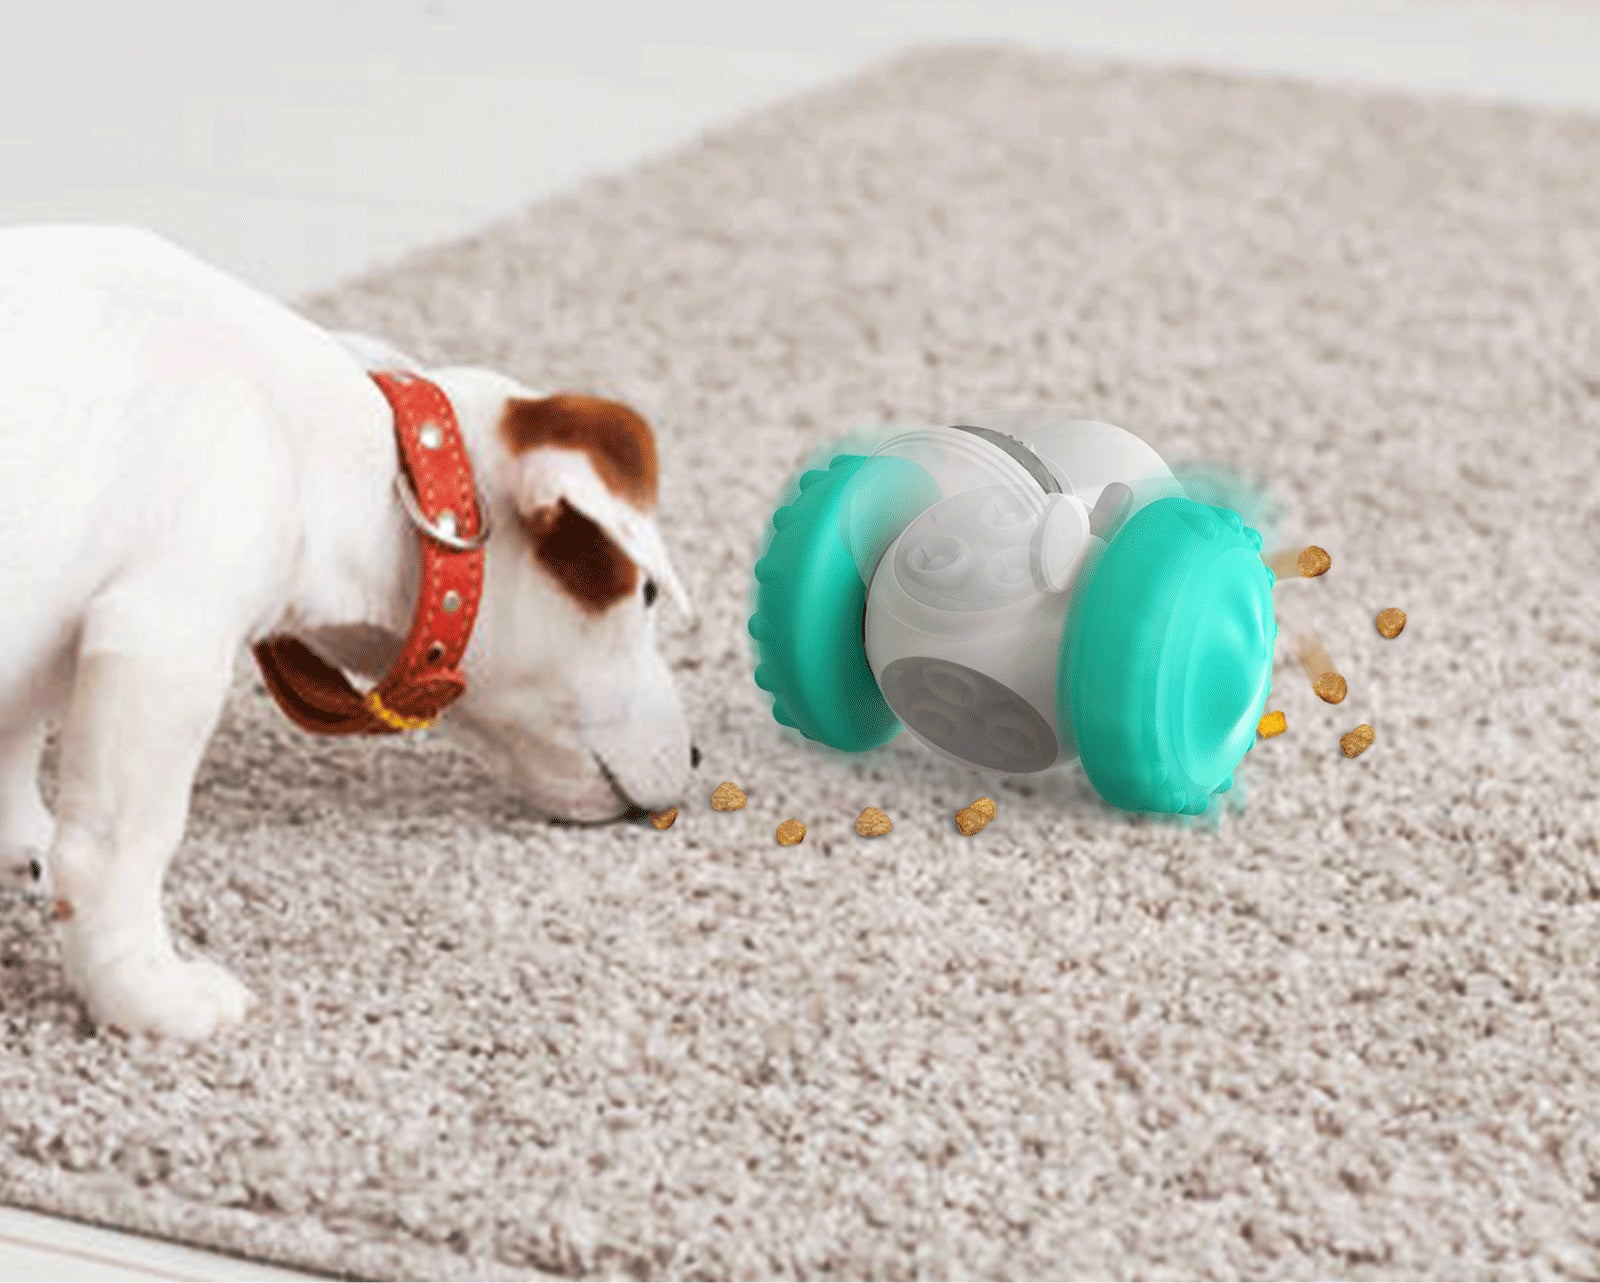 Pet Food Interactive Tumbler Training Dog Toy